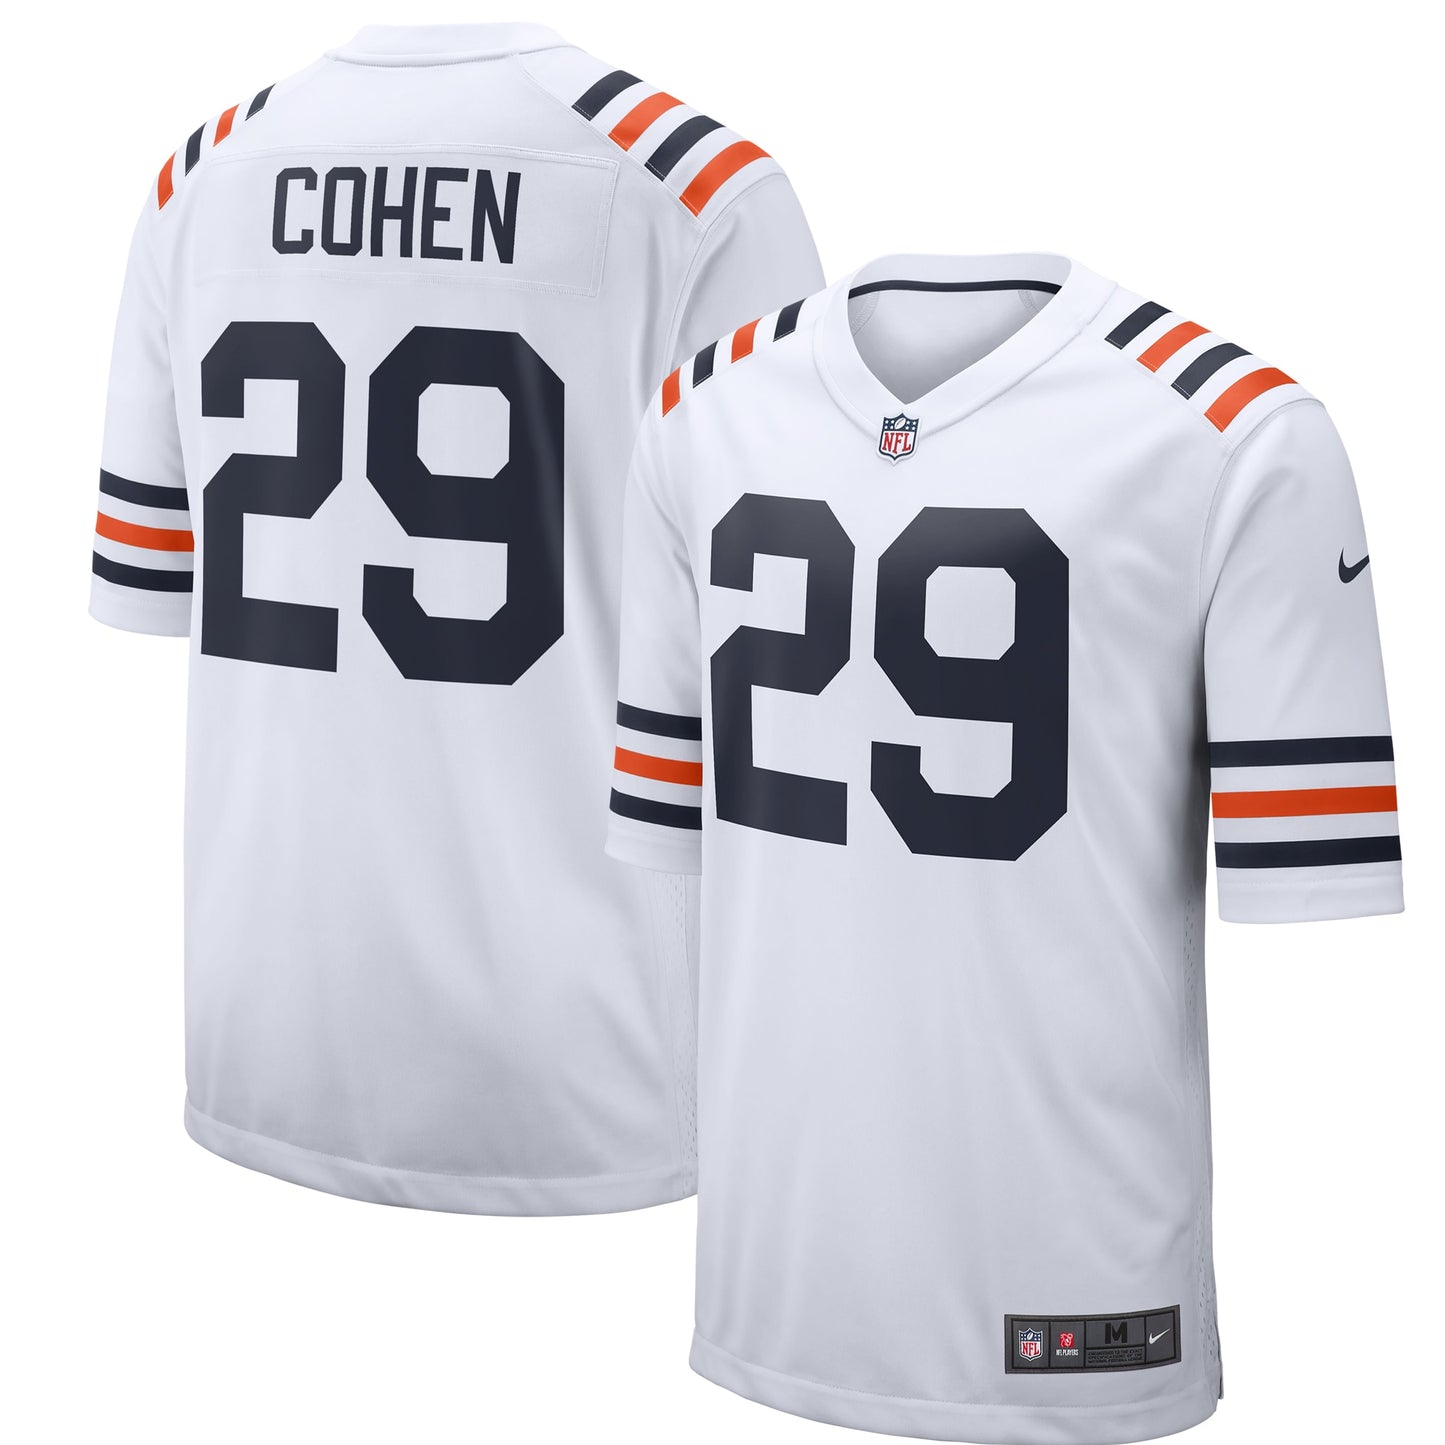 Tarik Cohen Chicago Bears Nike 2019 Alternate Classic Game Jersey - White